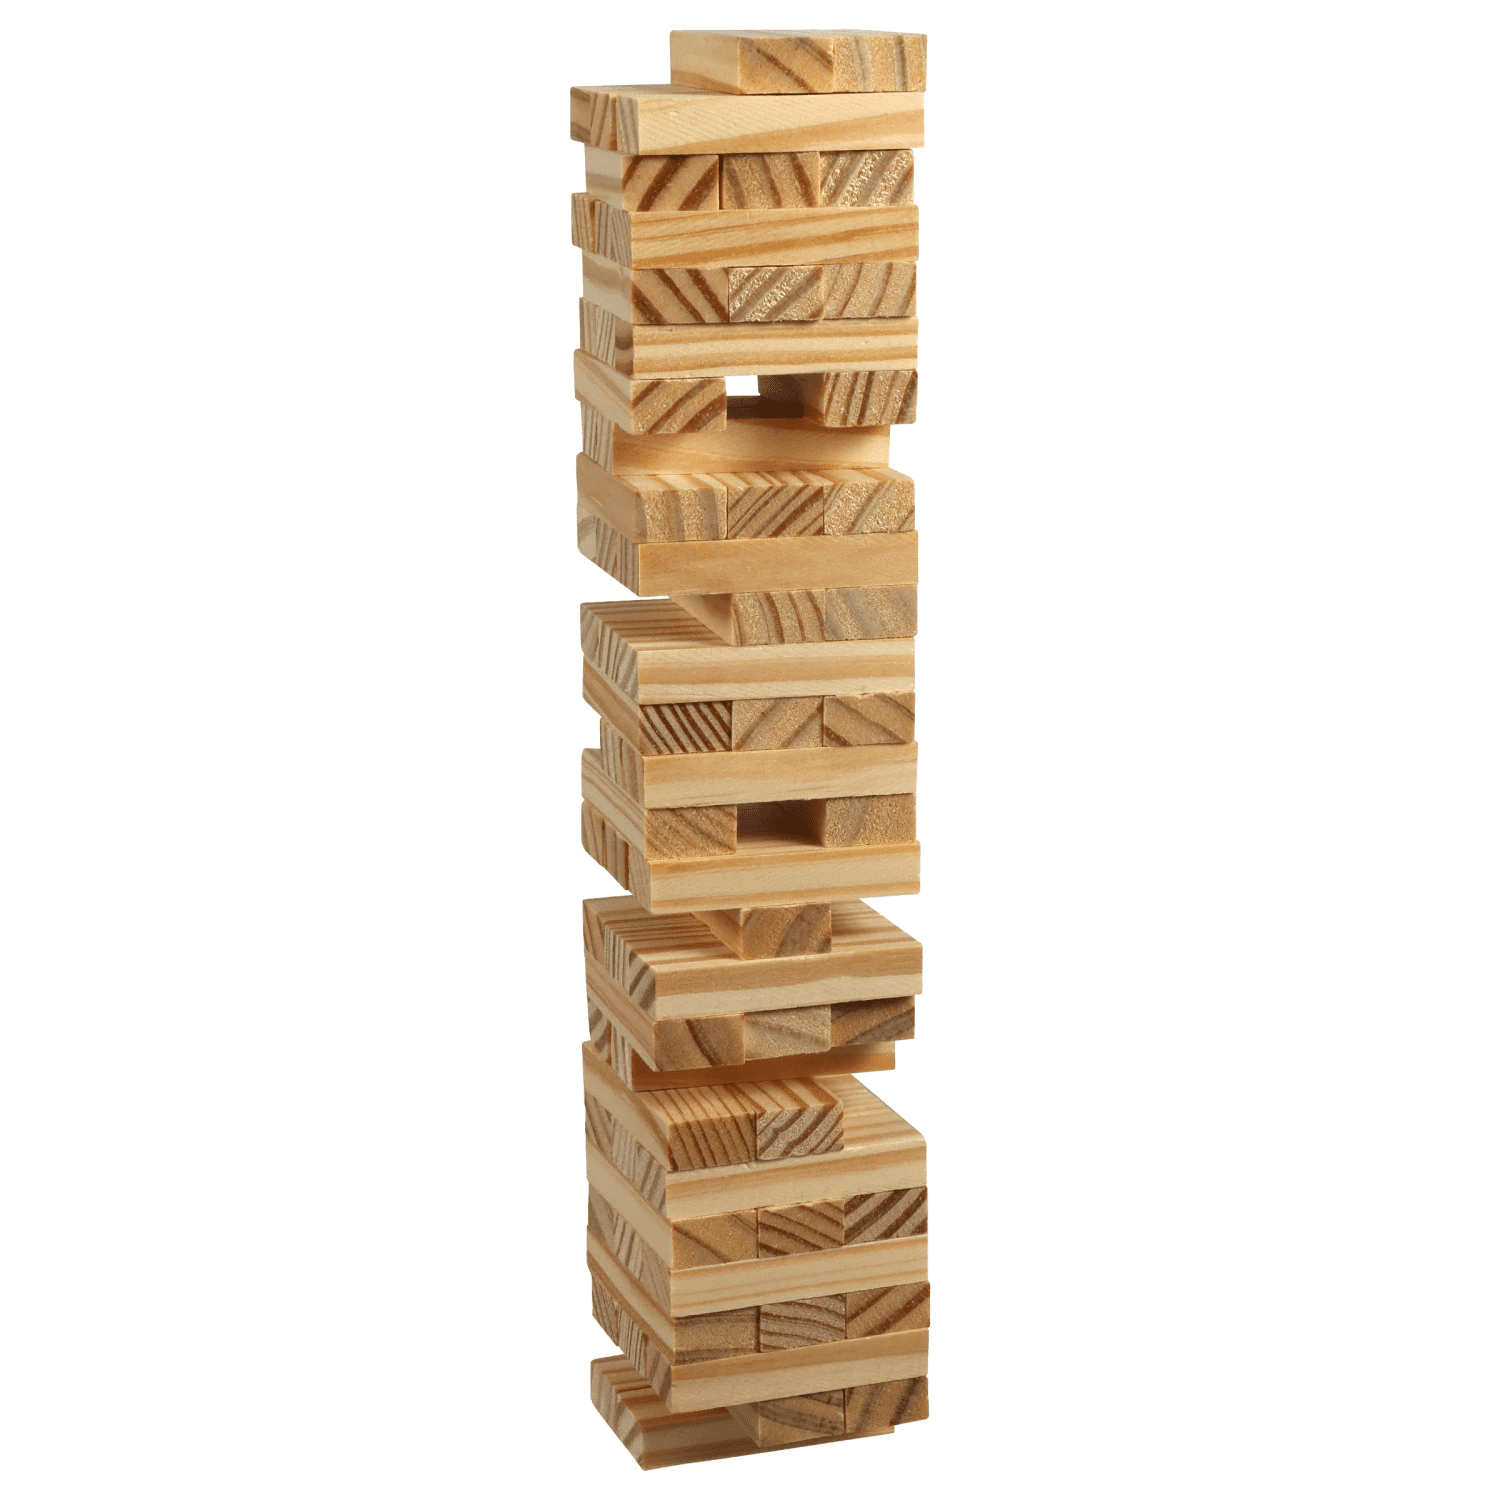 Tumbling Tower Game NEW SEALED BOX VERY FUN! 72 Wood Blocks Travel Size 